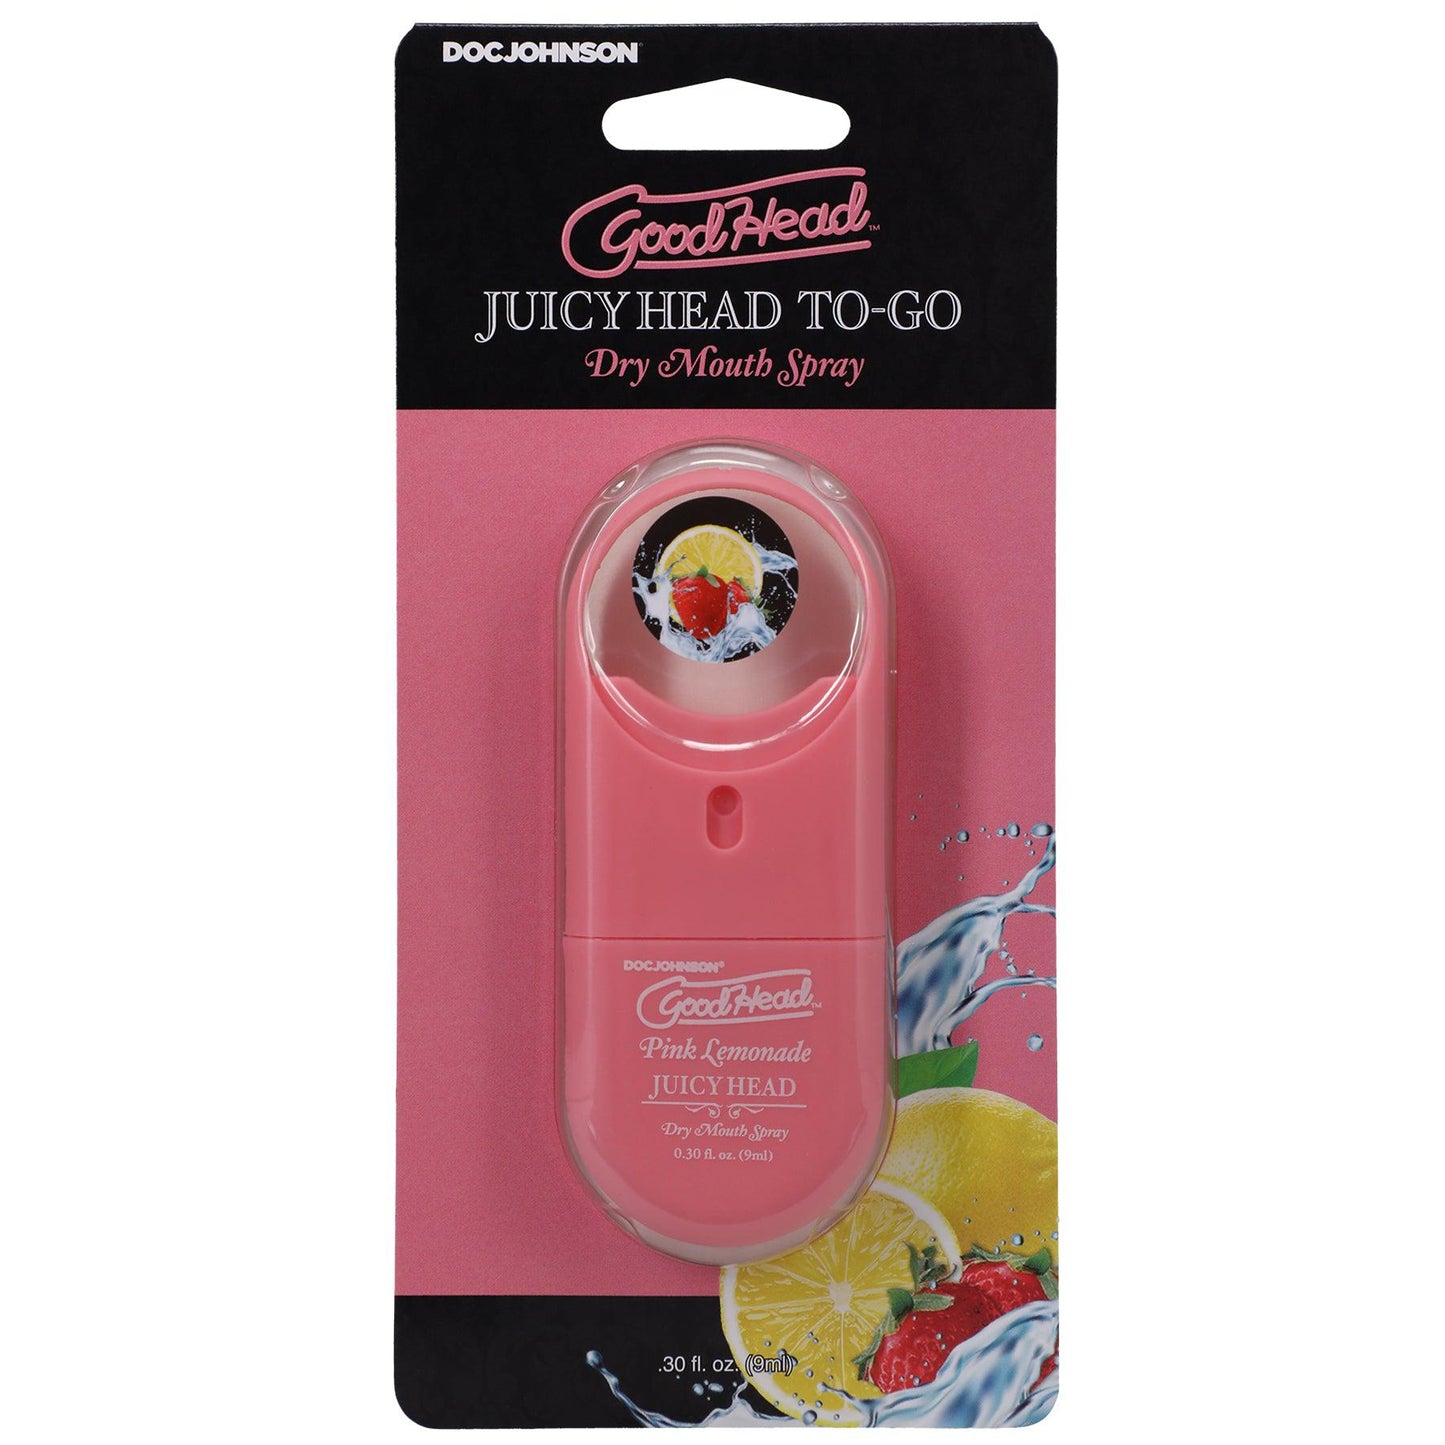 Goodhead - Juicy Head Dry Mouth Spray to-Go .30 Fl - Pink Lemonade